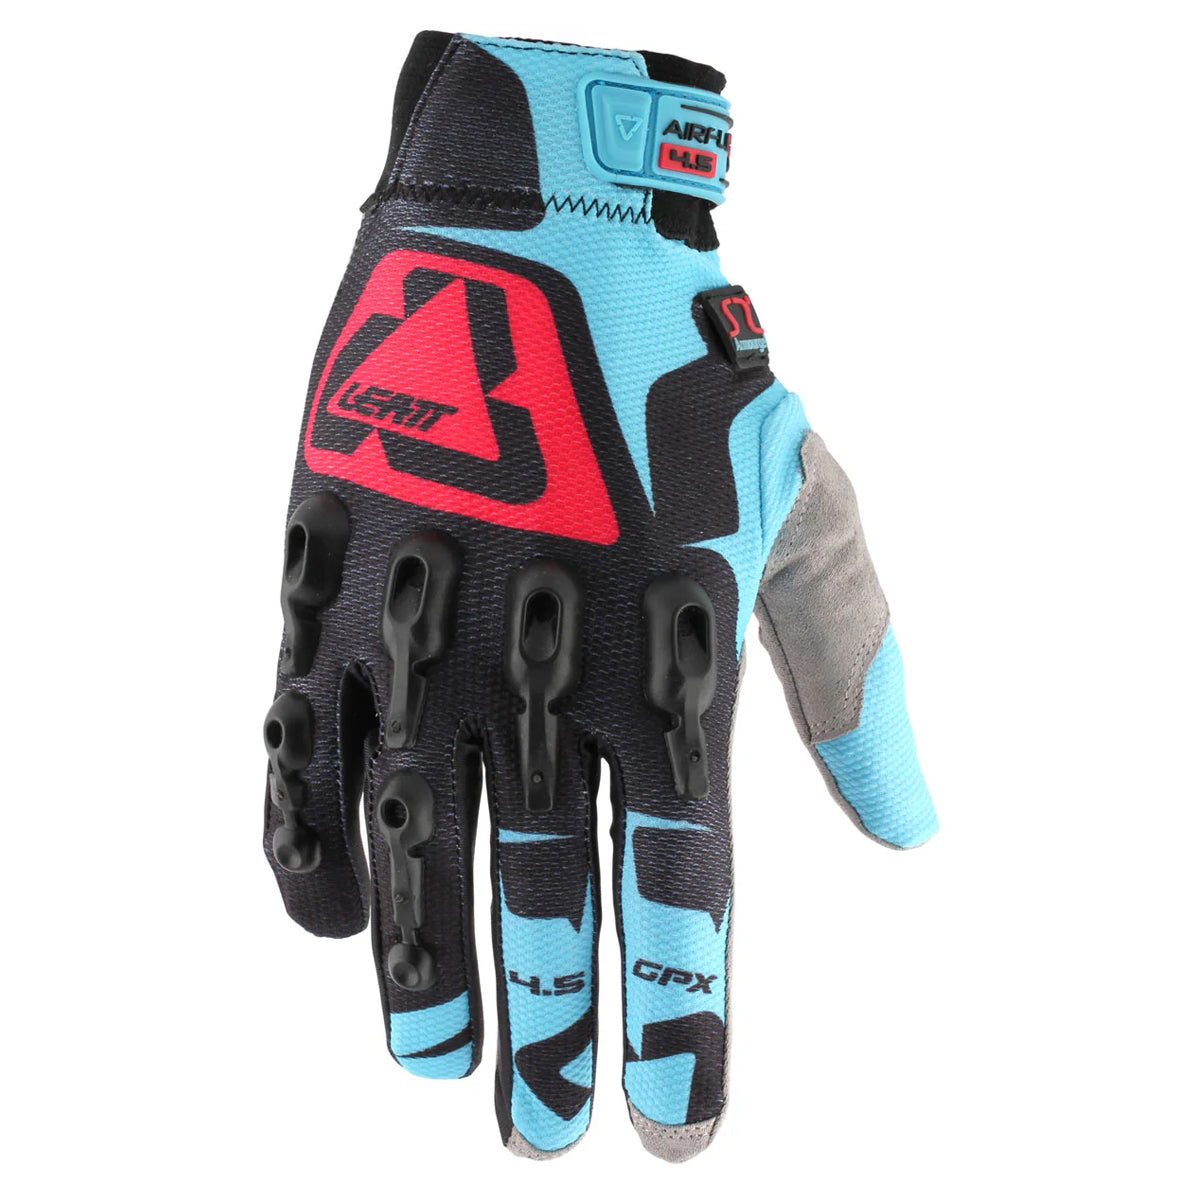 Leatt GPX 4.5 Lite Adult Off-Road Gloves